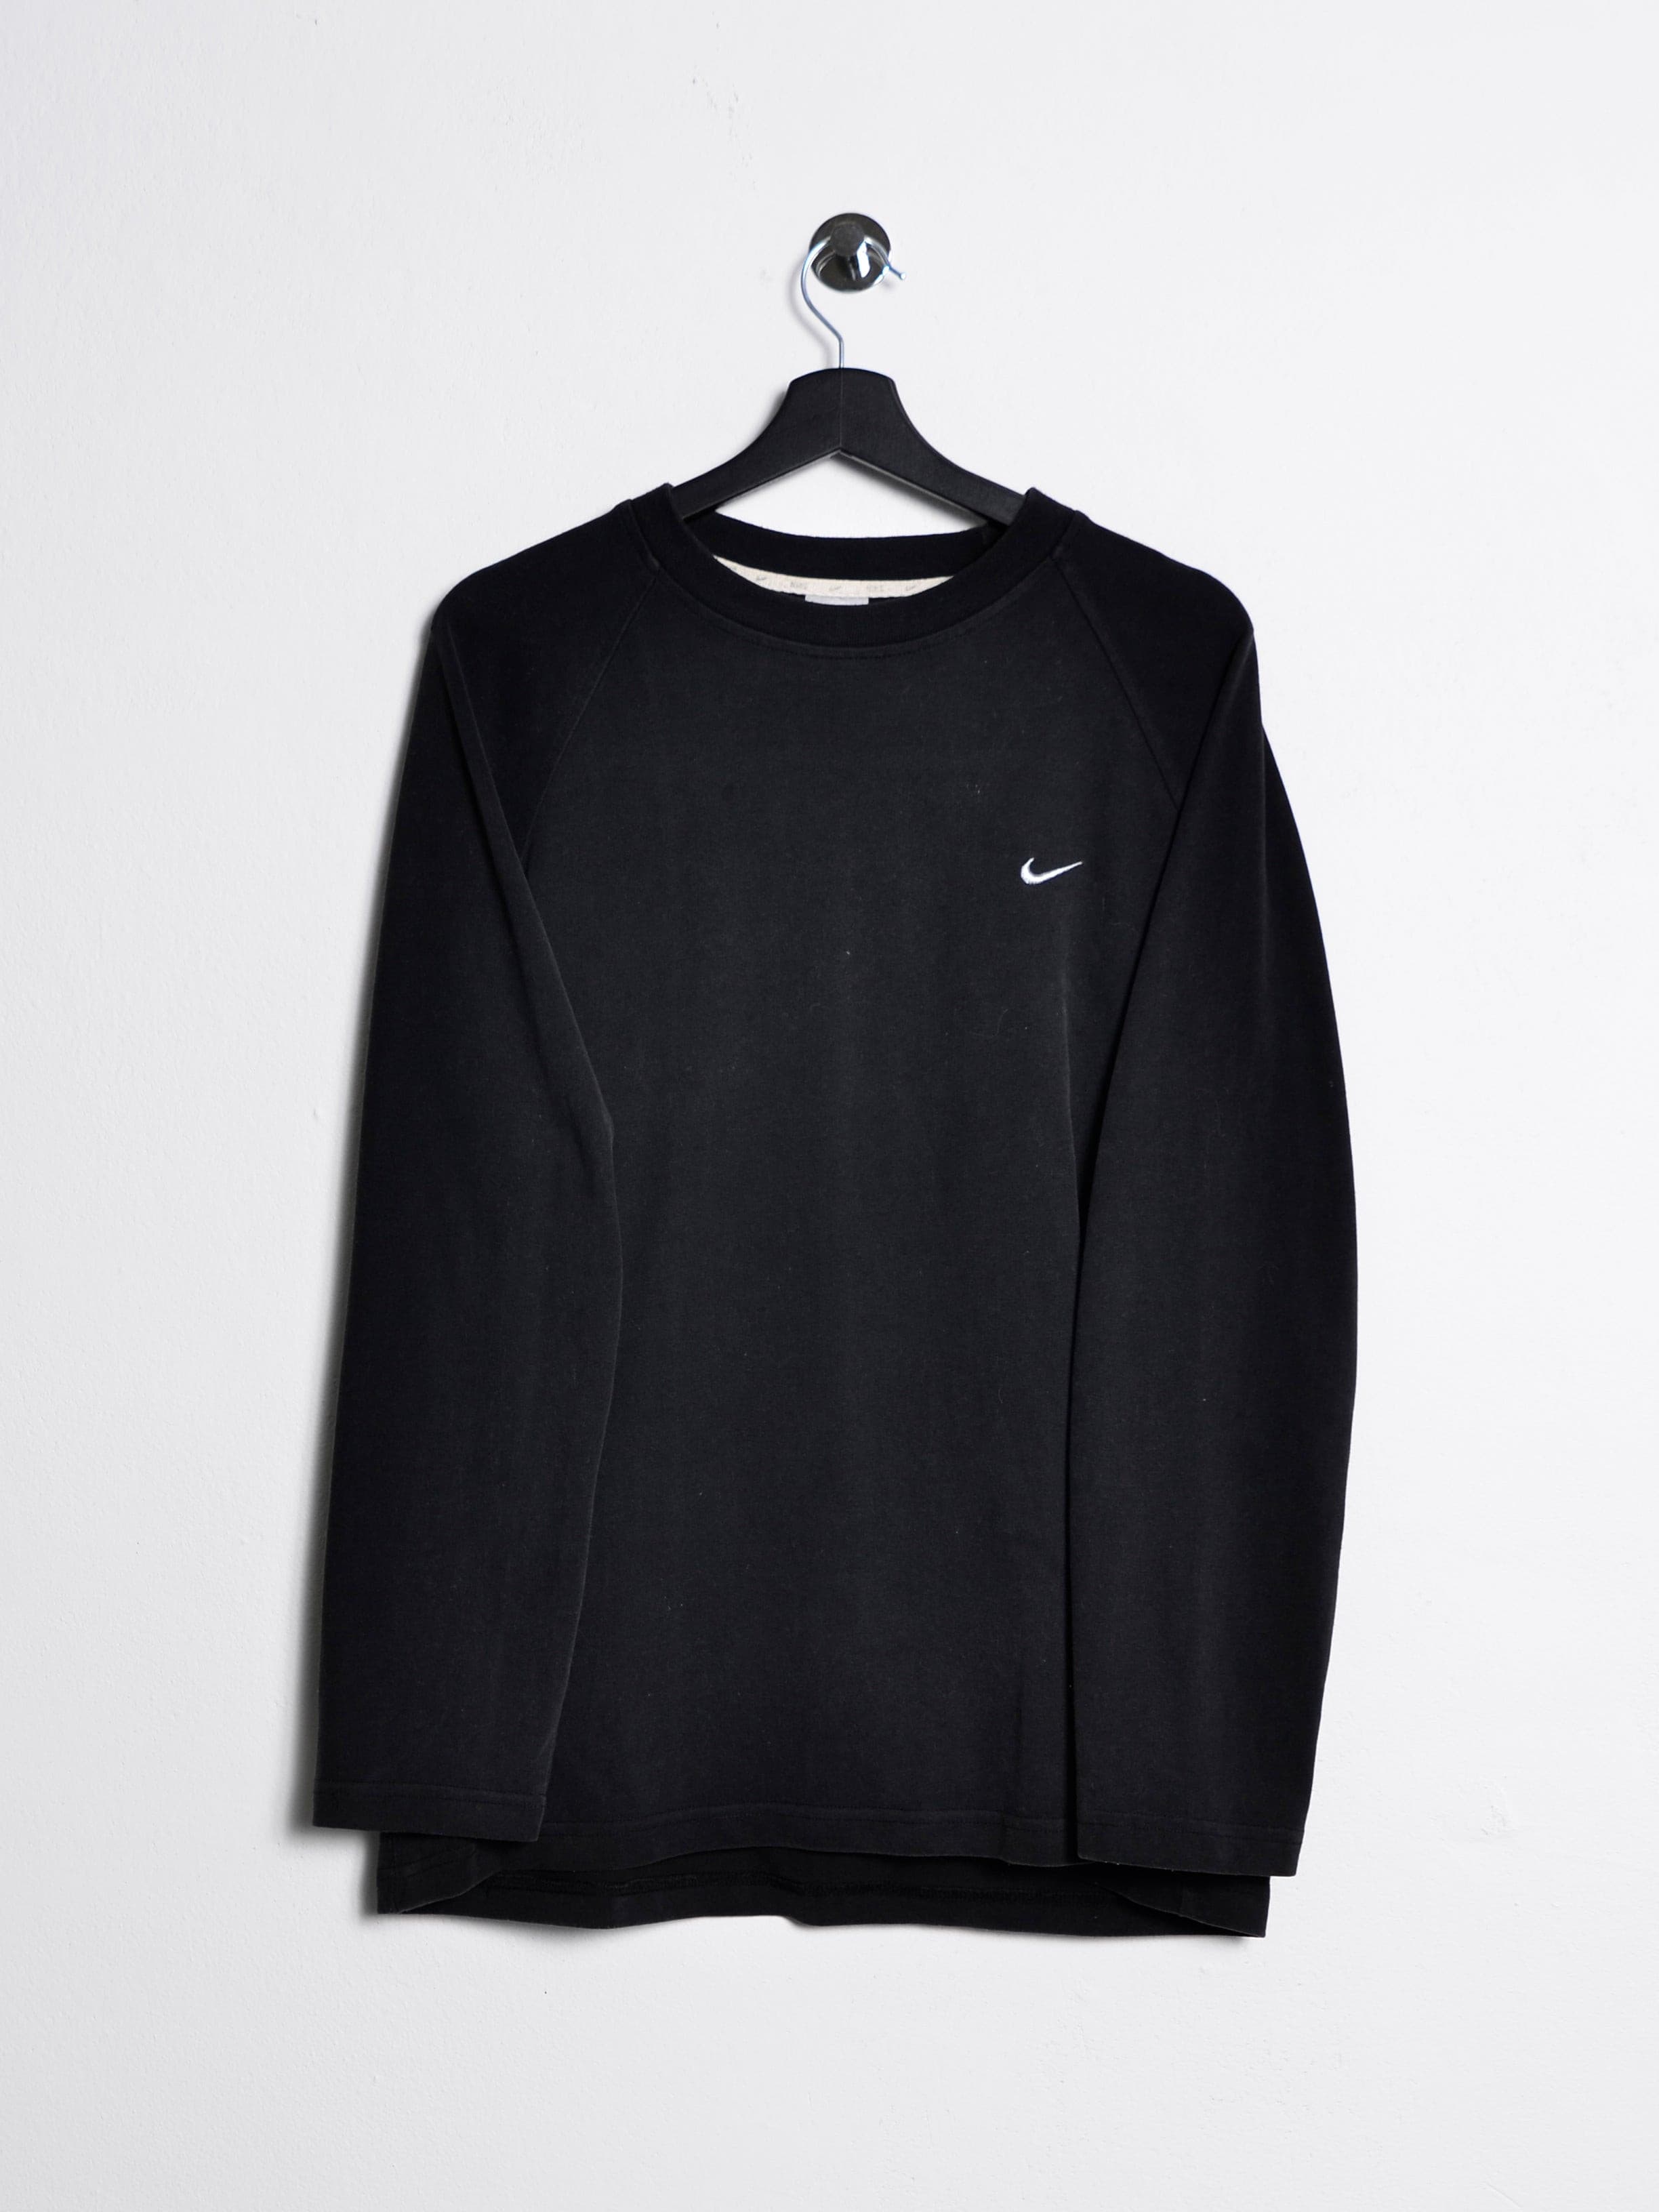 Nike Basic Sweatshirt Black // X-Large - RHAGHOUSE VINTAGE